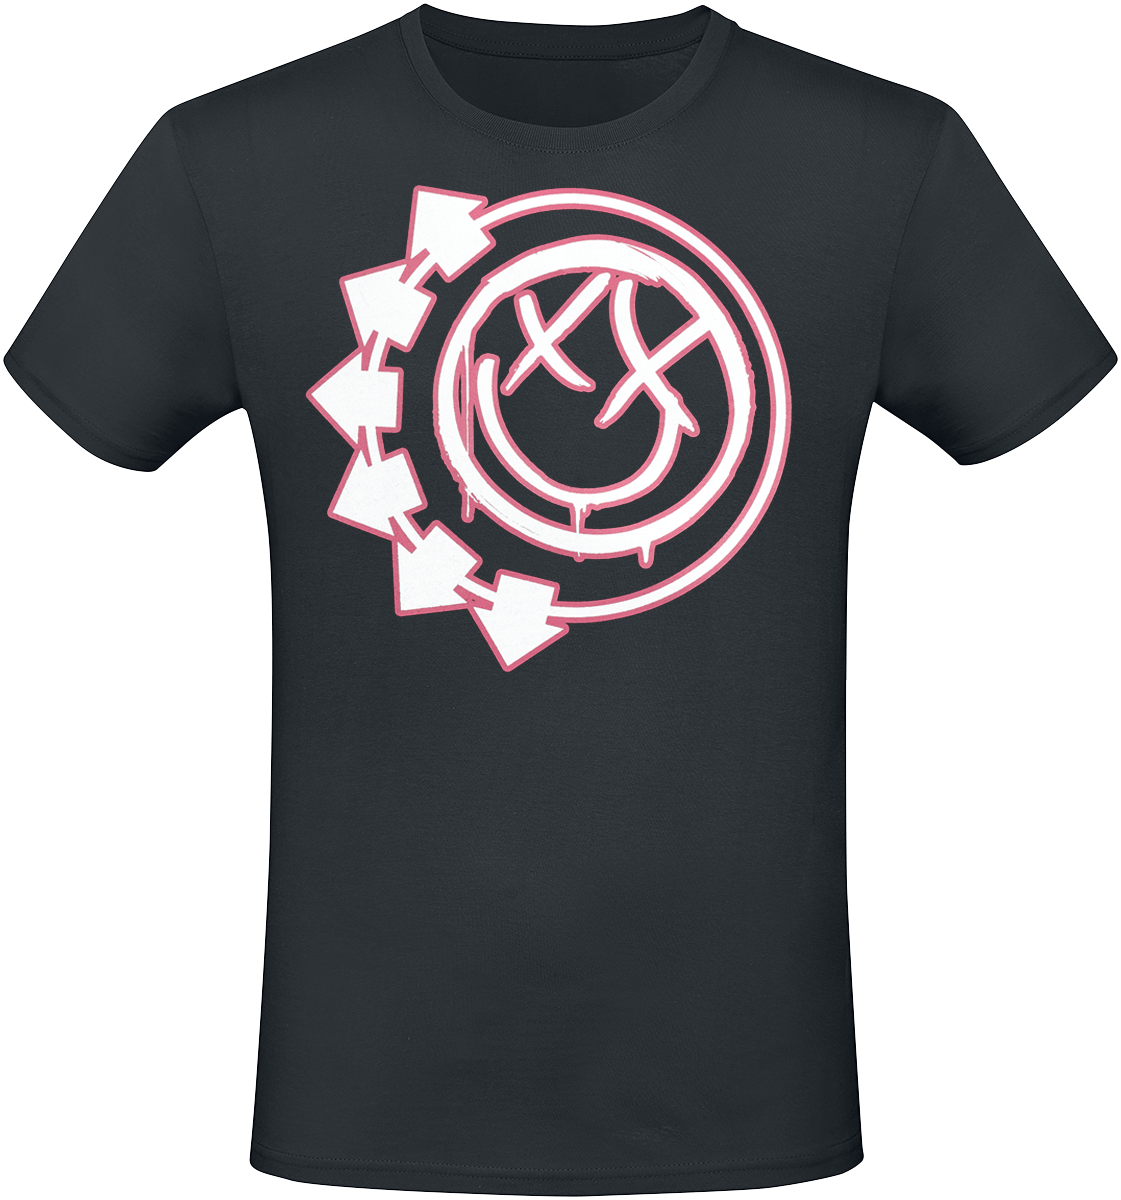 Blink-182 - Harrows Smiley - T-Shirt - schwarz